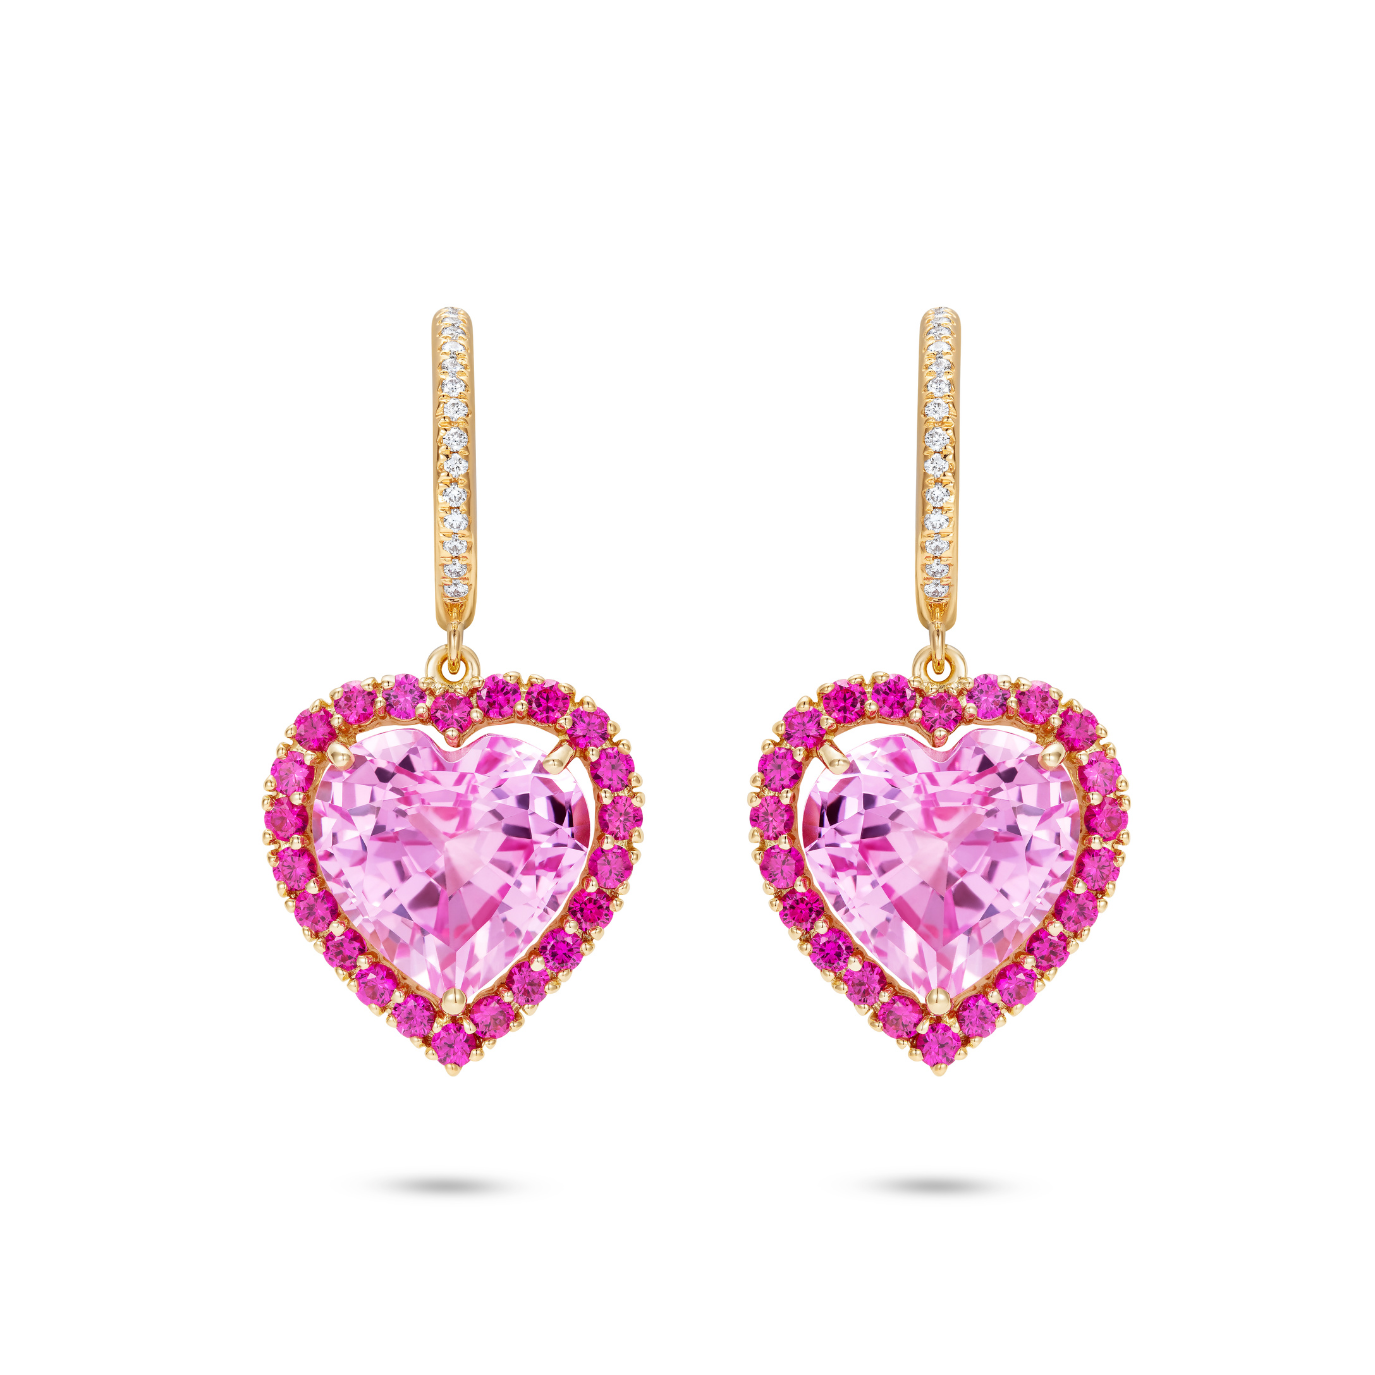 Le Cercle Heart Shaped Pink Sapphire Earrings